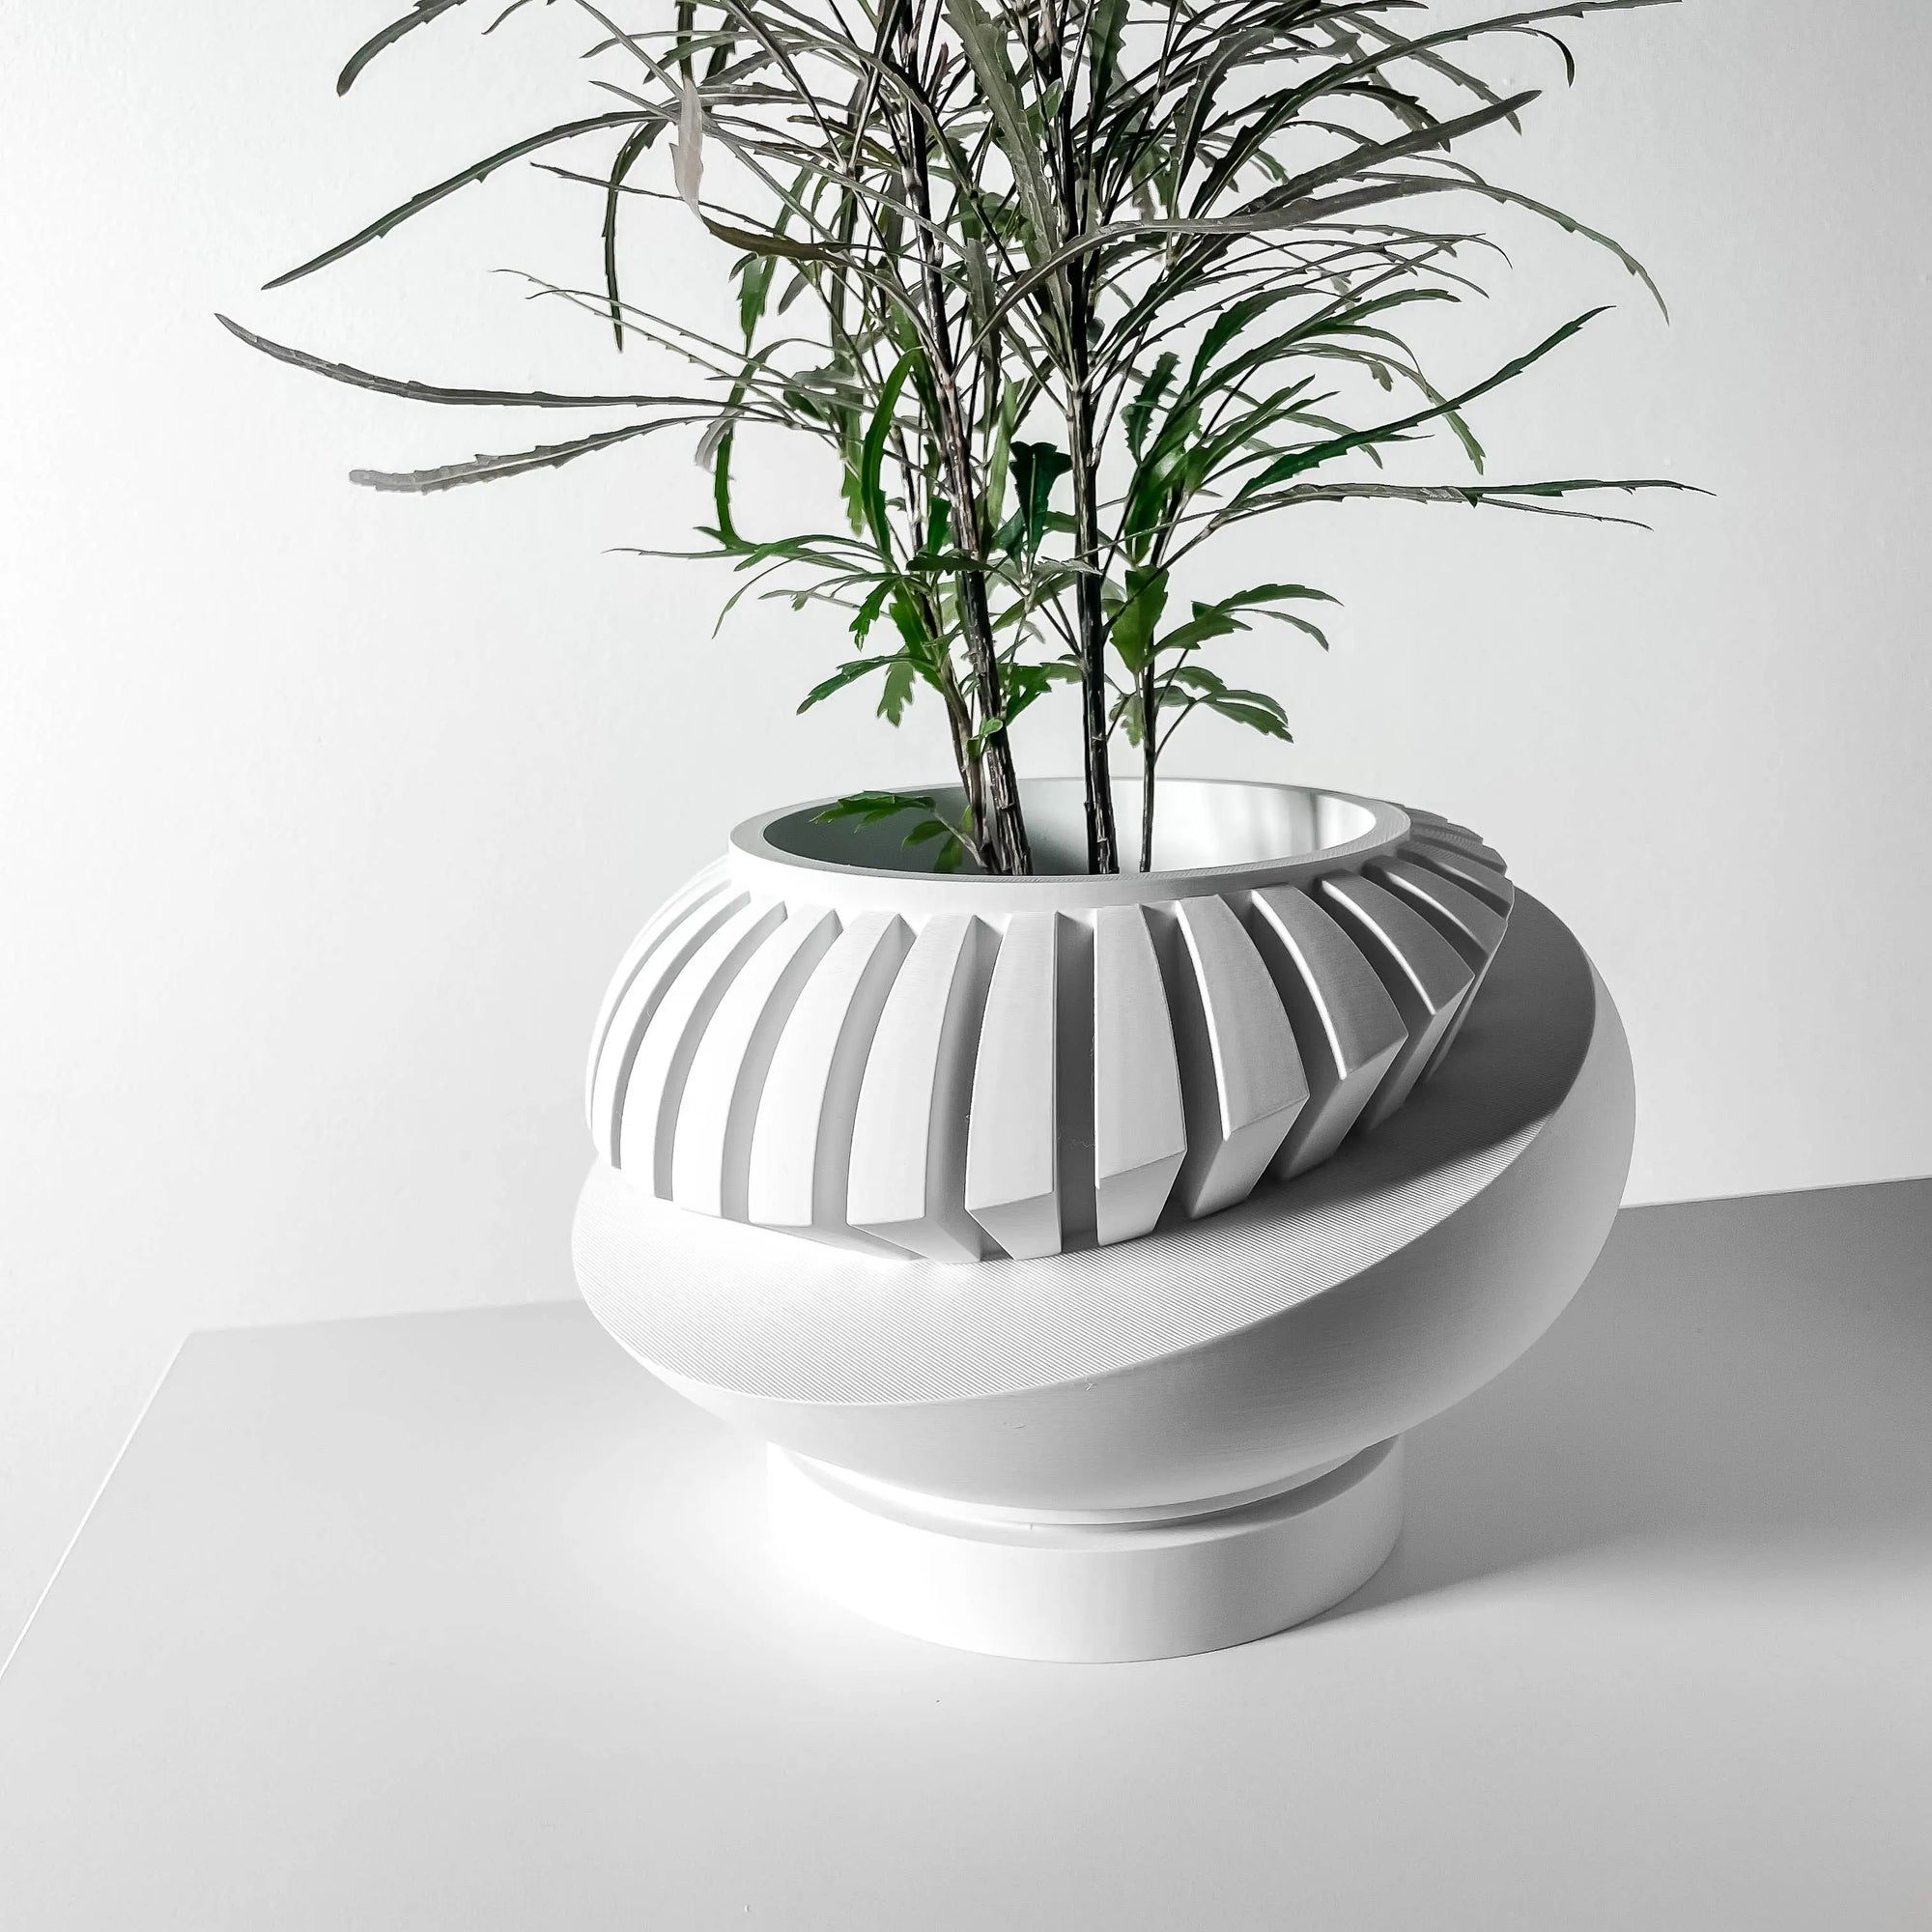 Luxar Planter Pot: Sleek 3D Printed Modern Design for Stylish Indoor Gardening